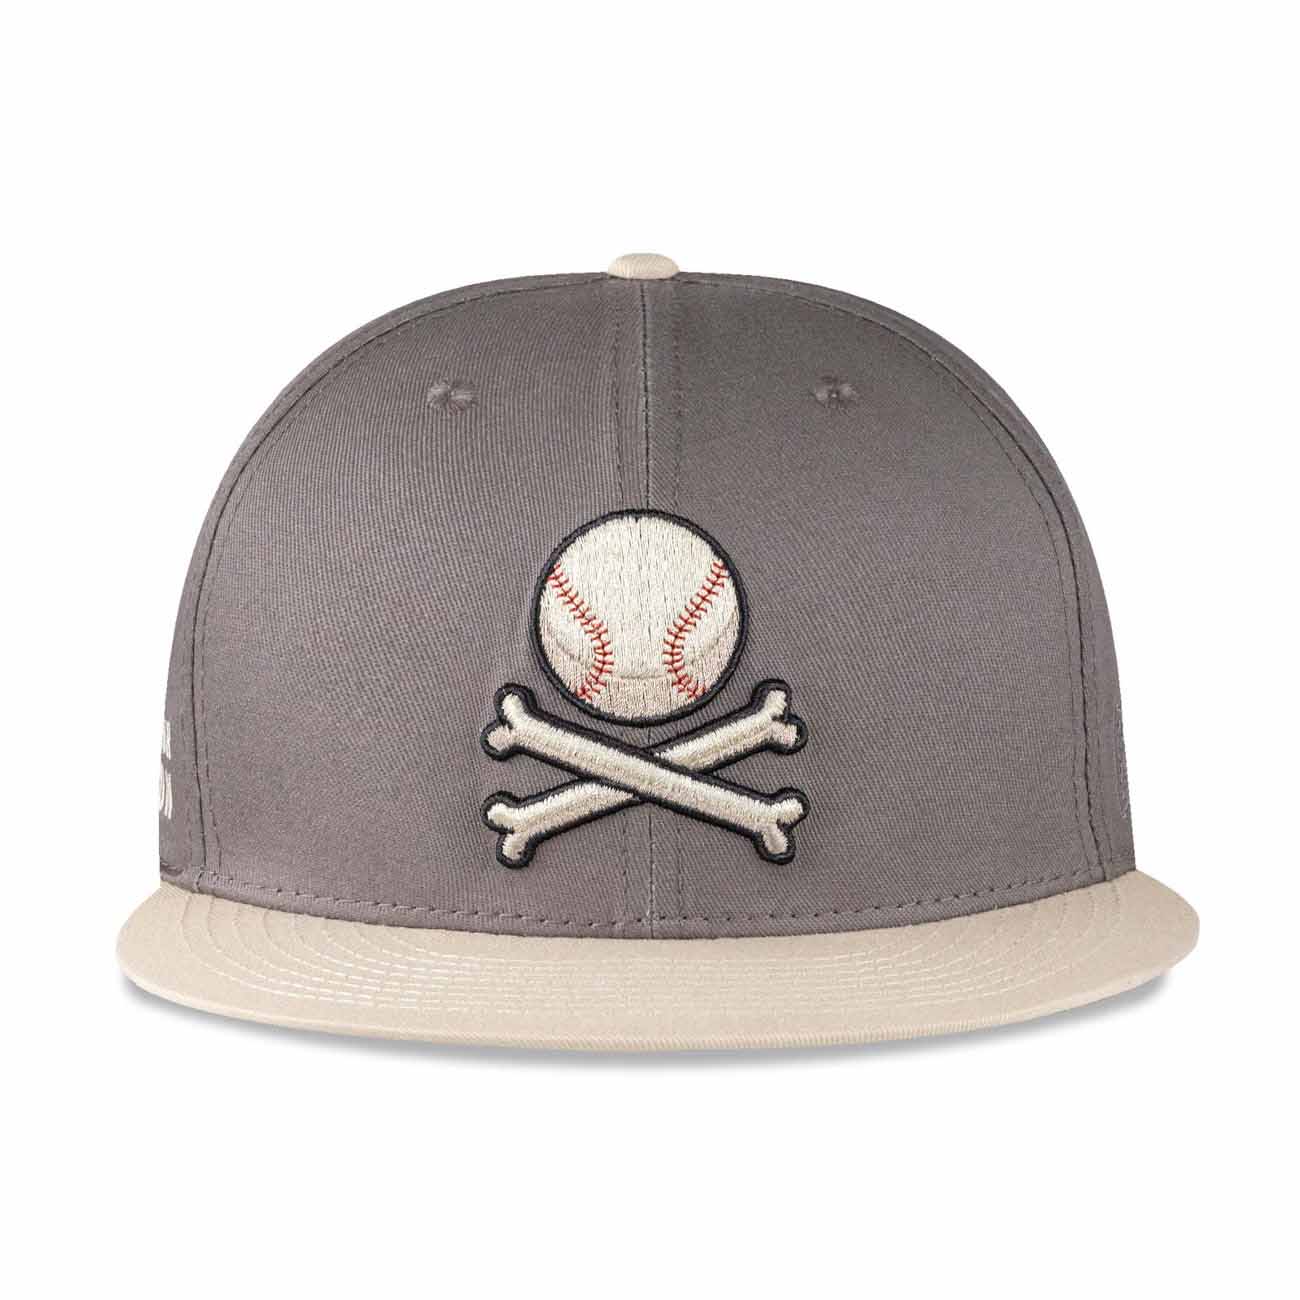 Baseballism Pick Your Poison Snapback Hat